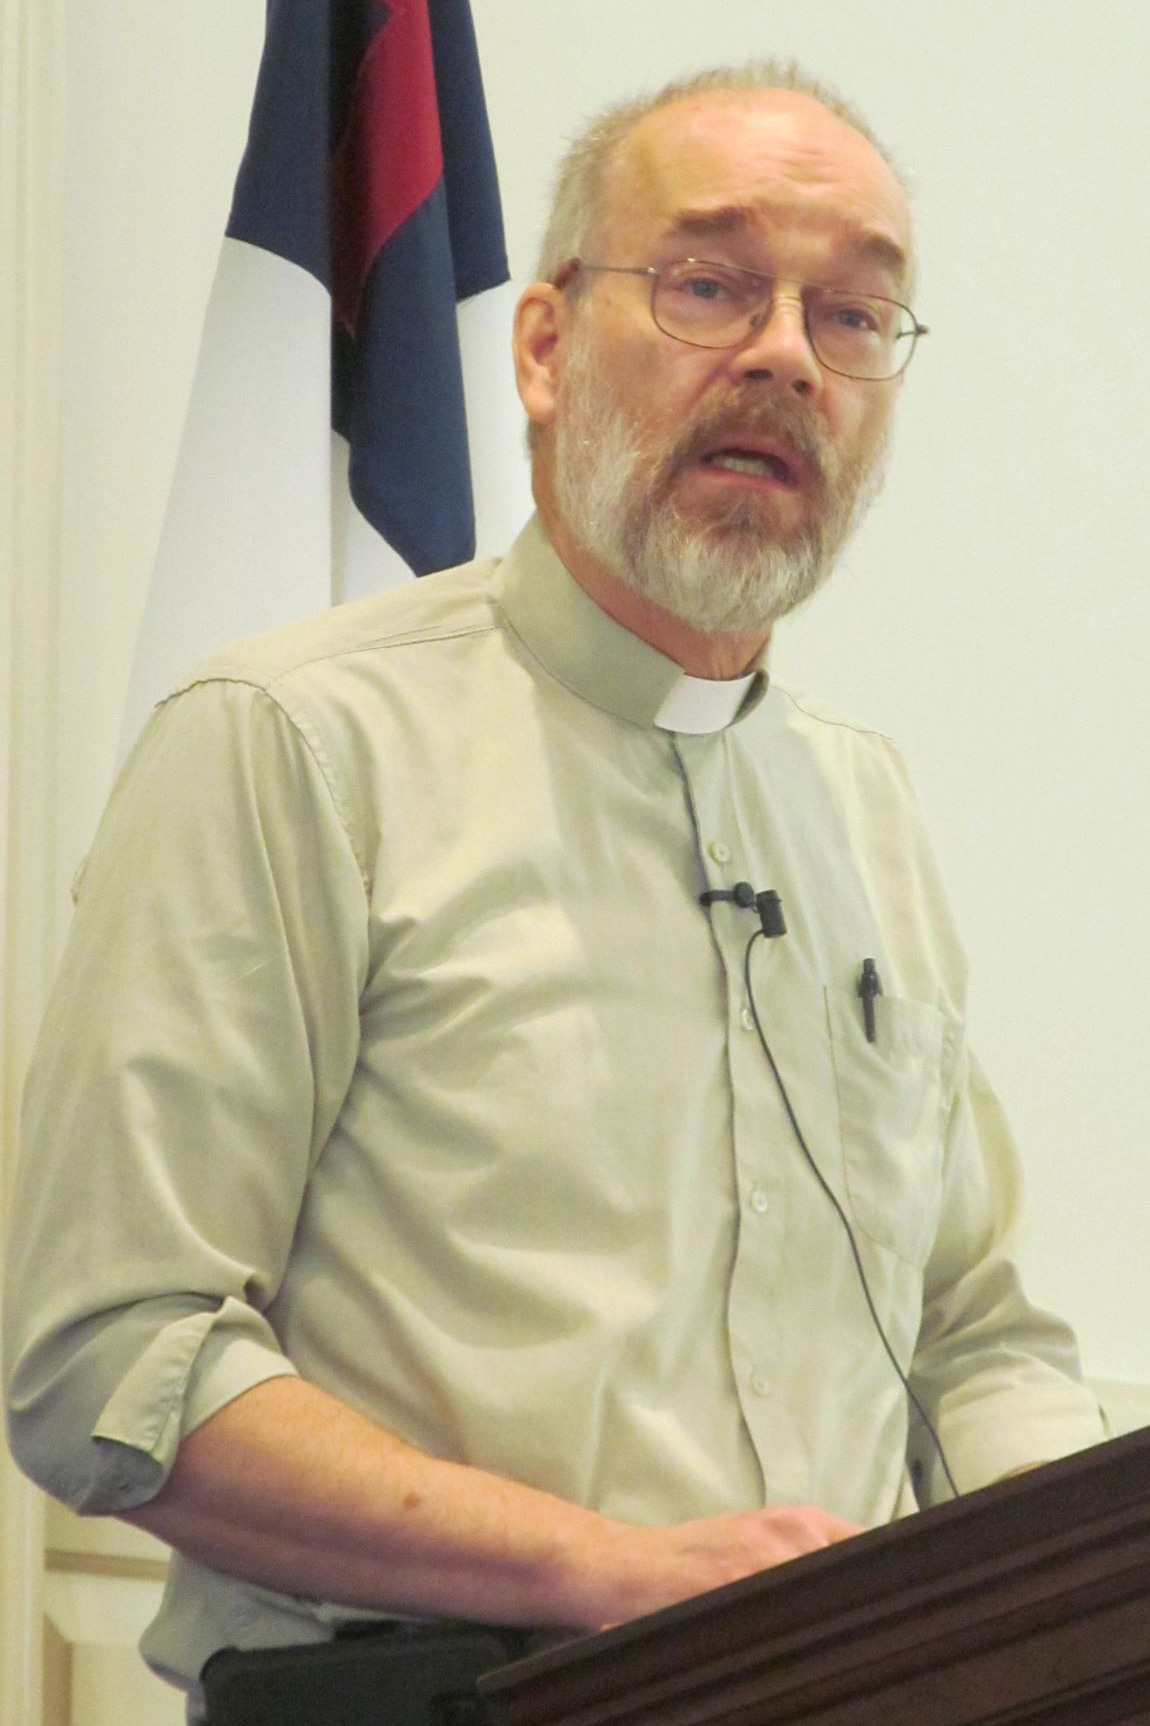 Pastor Mark Rowell